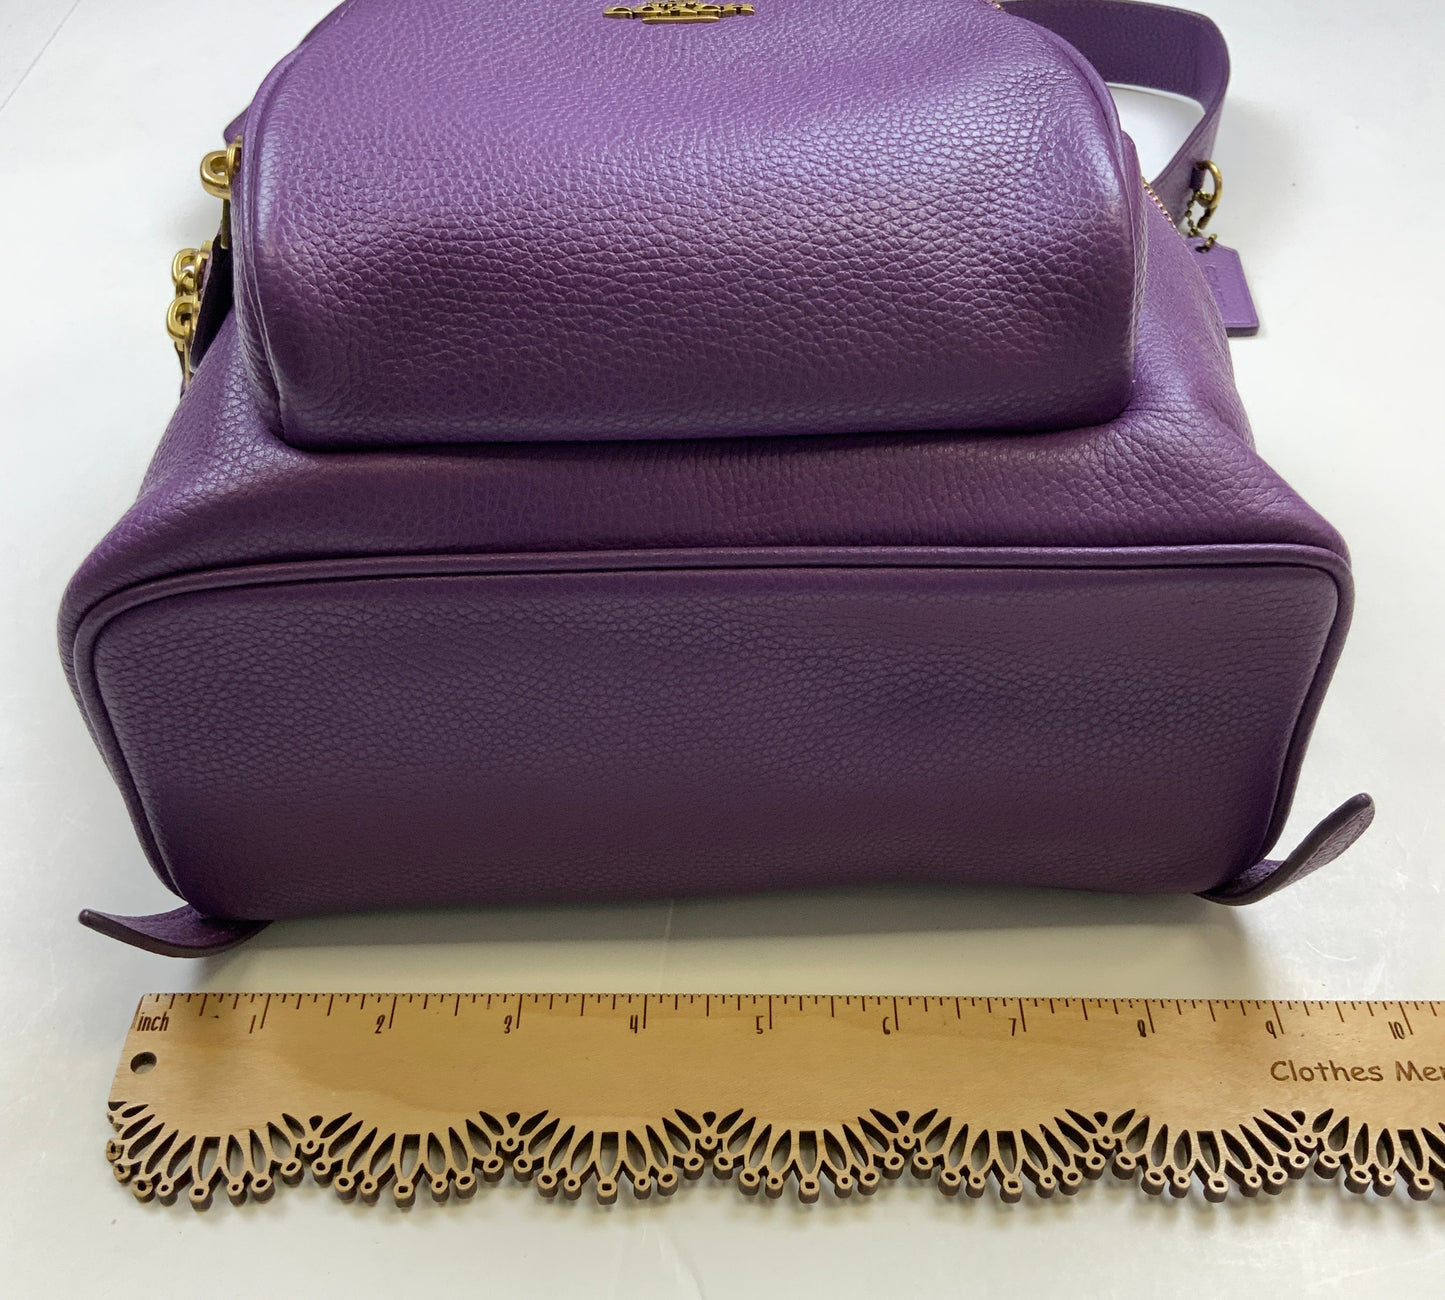 Backpack Designer By Coach  Size: Medium